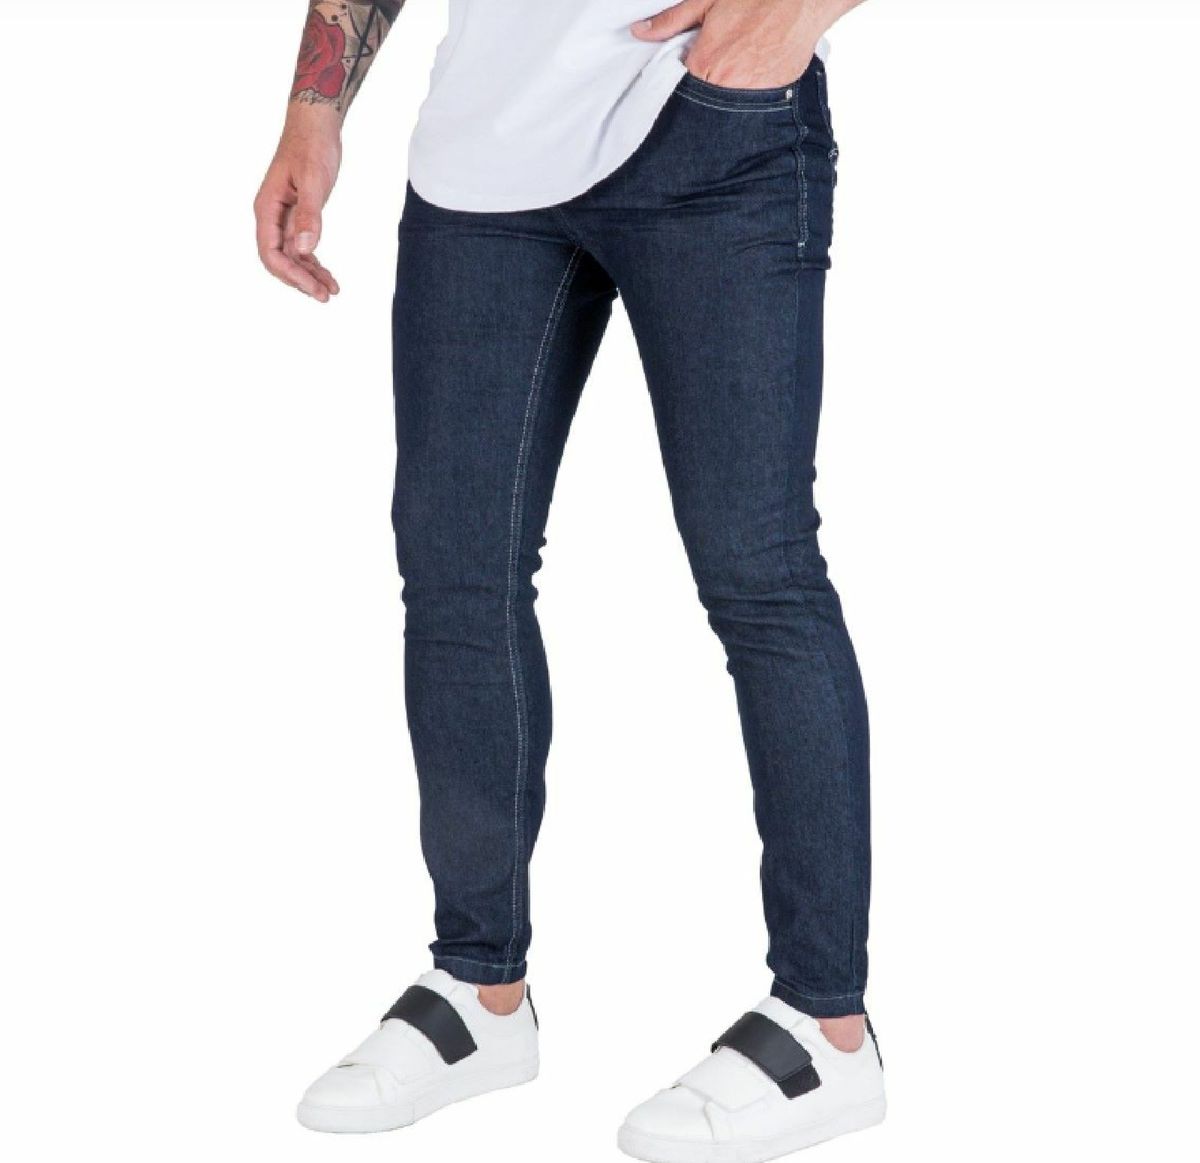 calca jeans masculina skinny